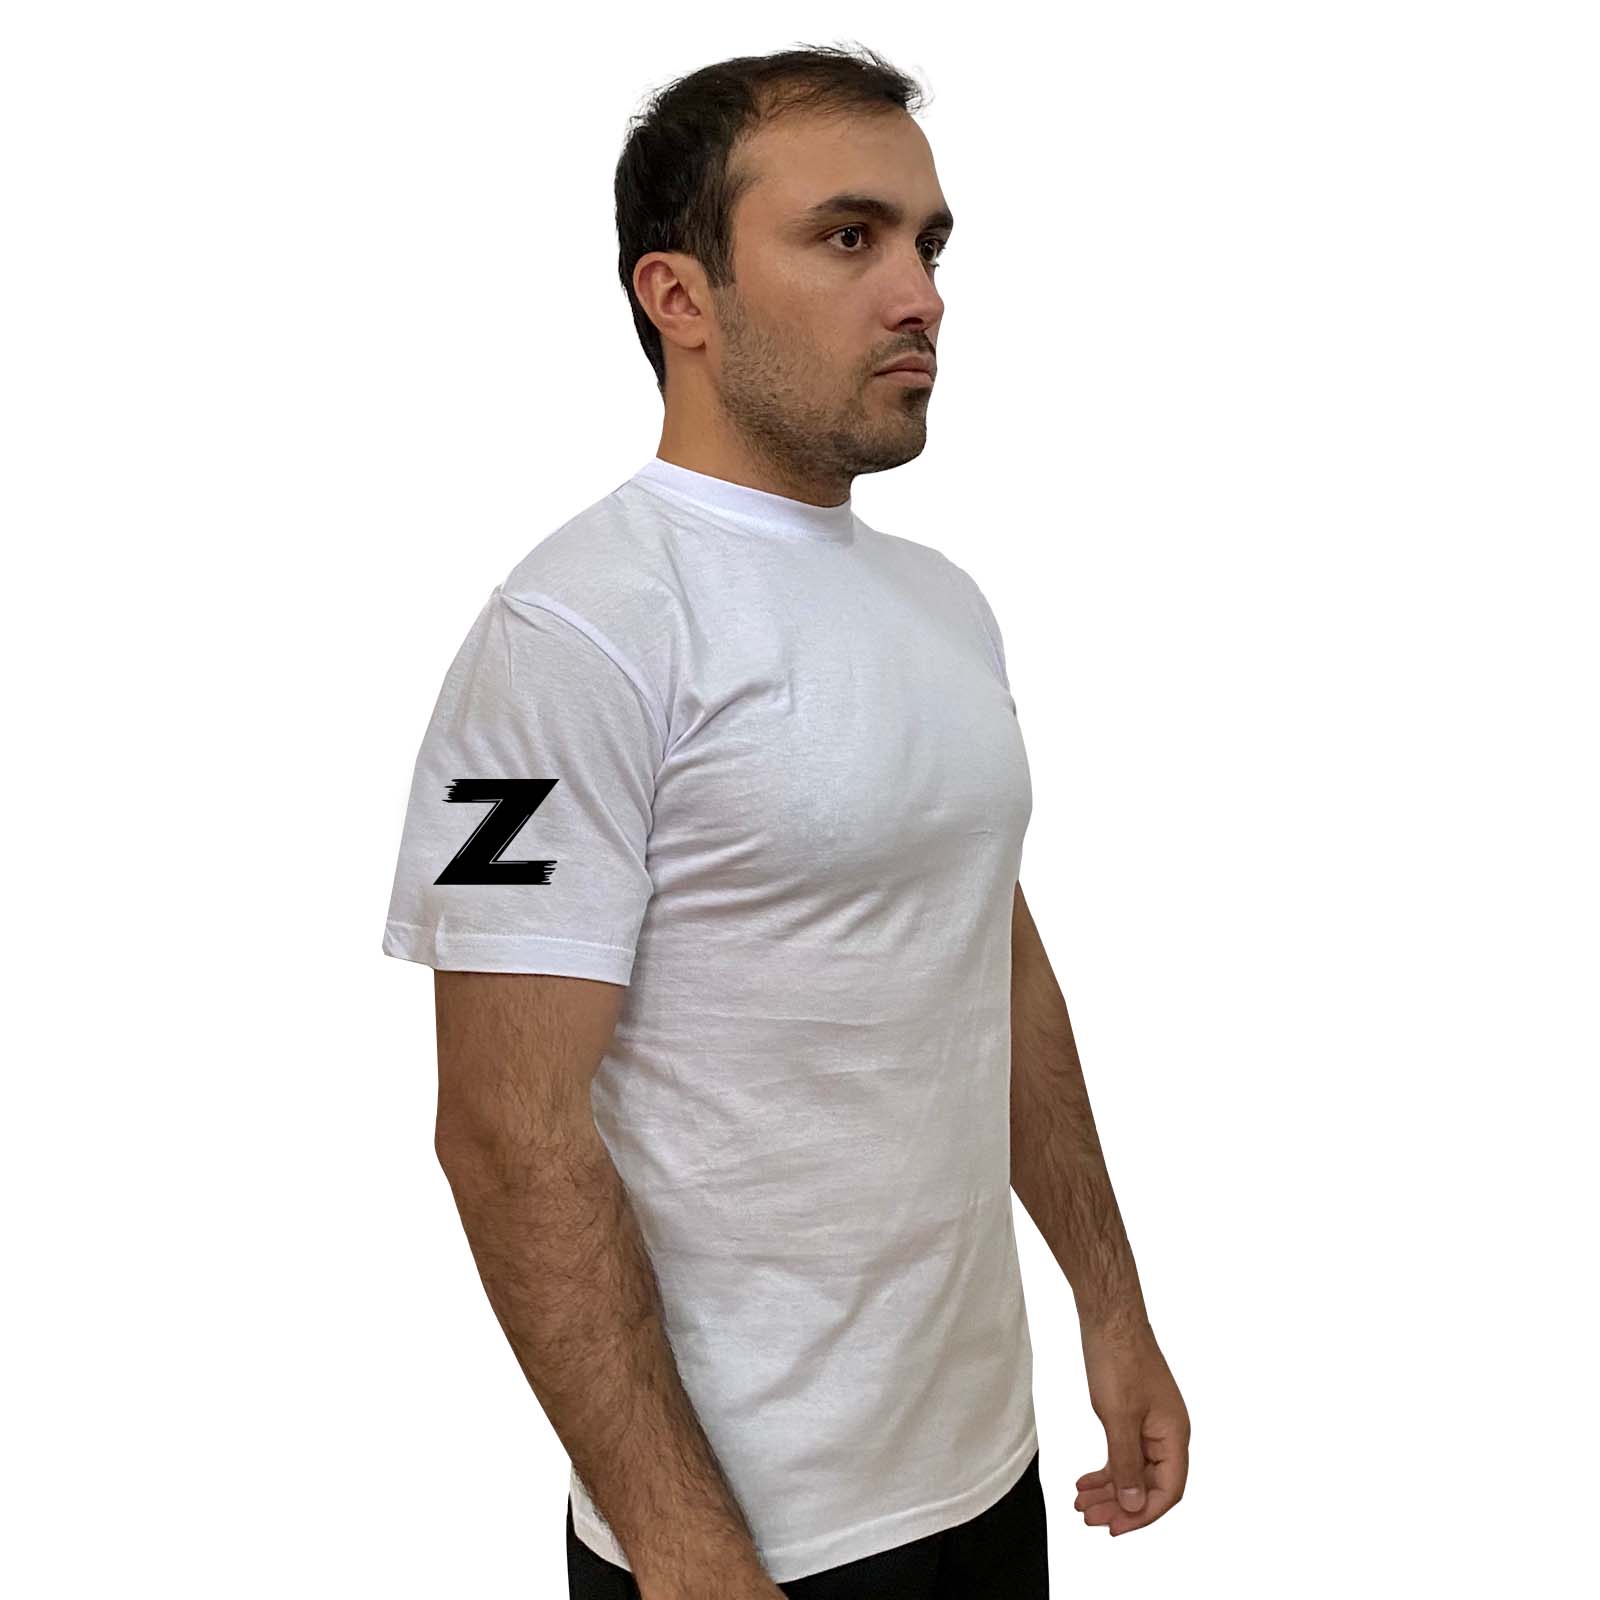 Белая футболка с буквой Z на рукаве - с доставкой